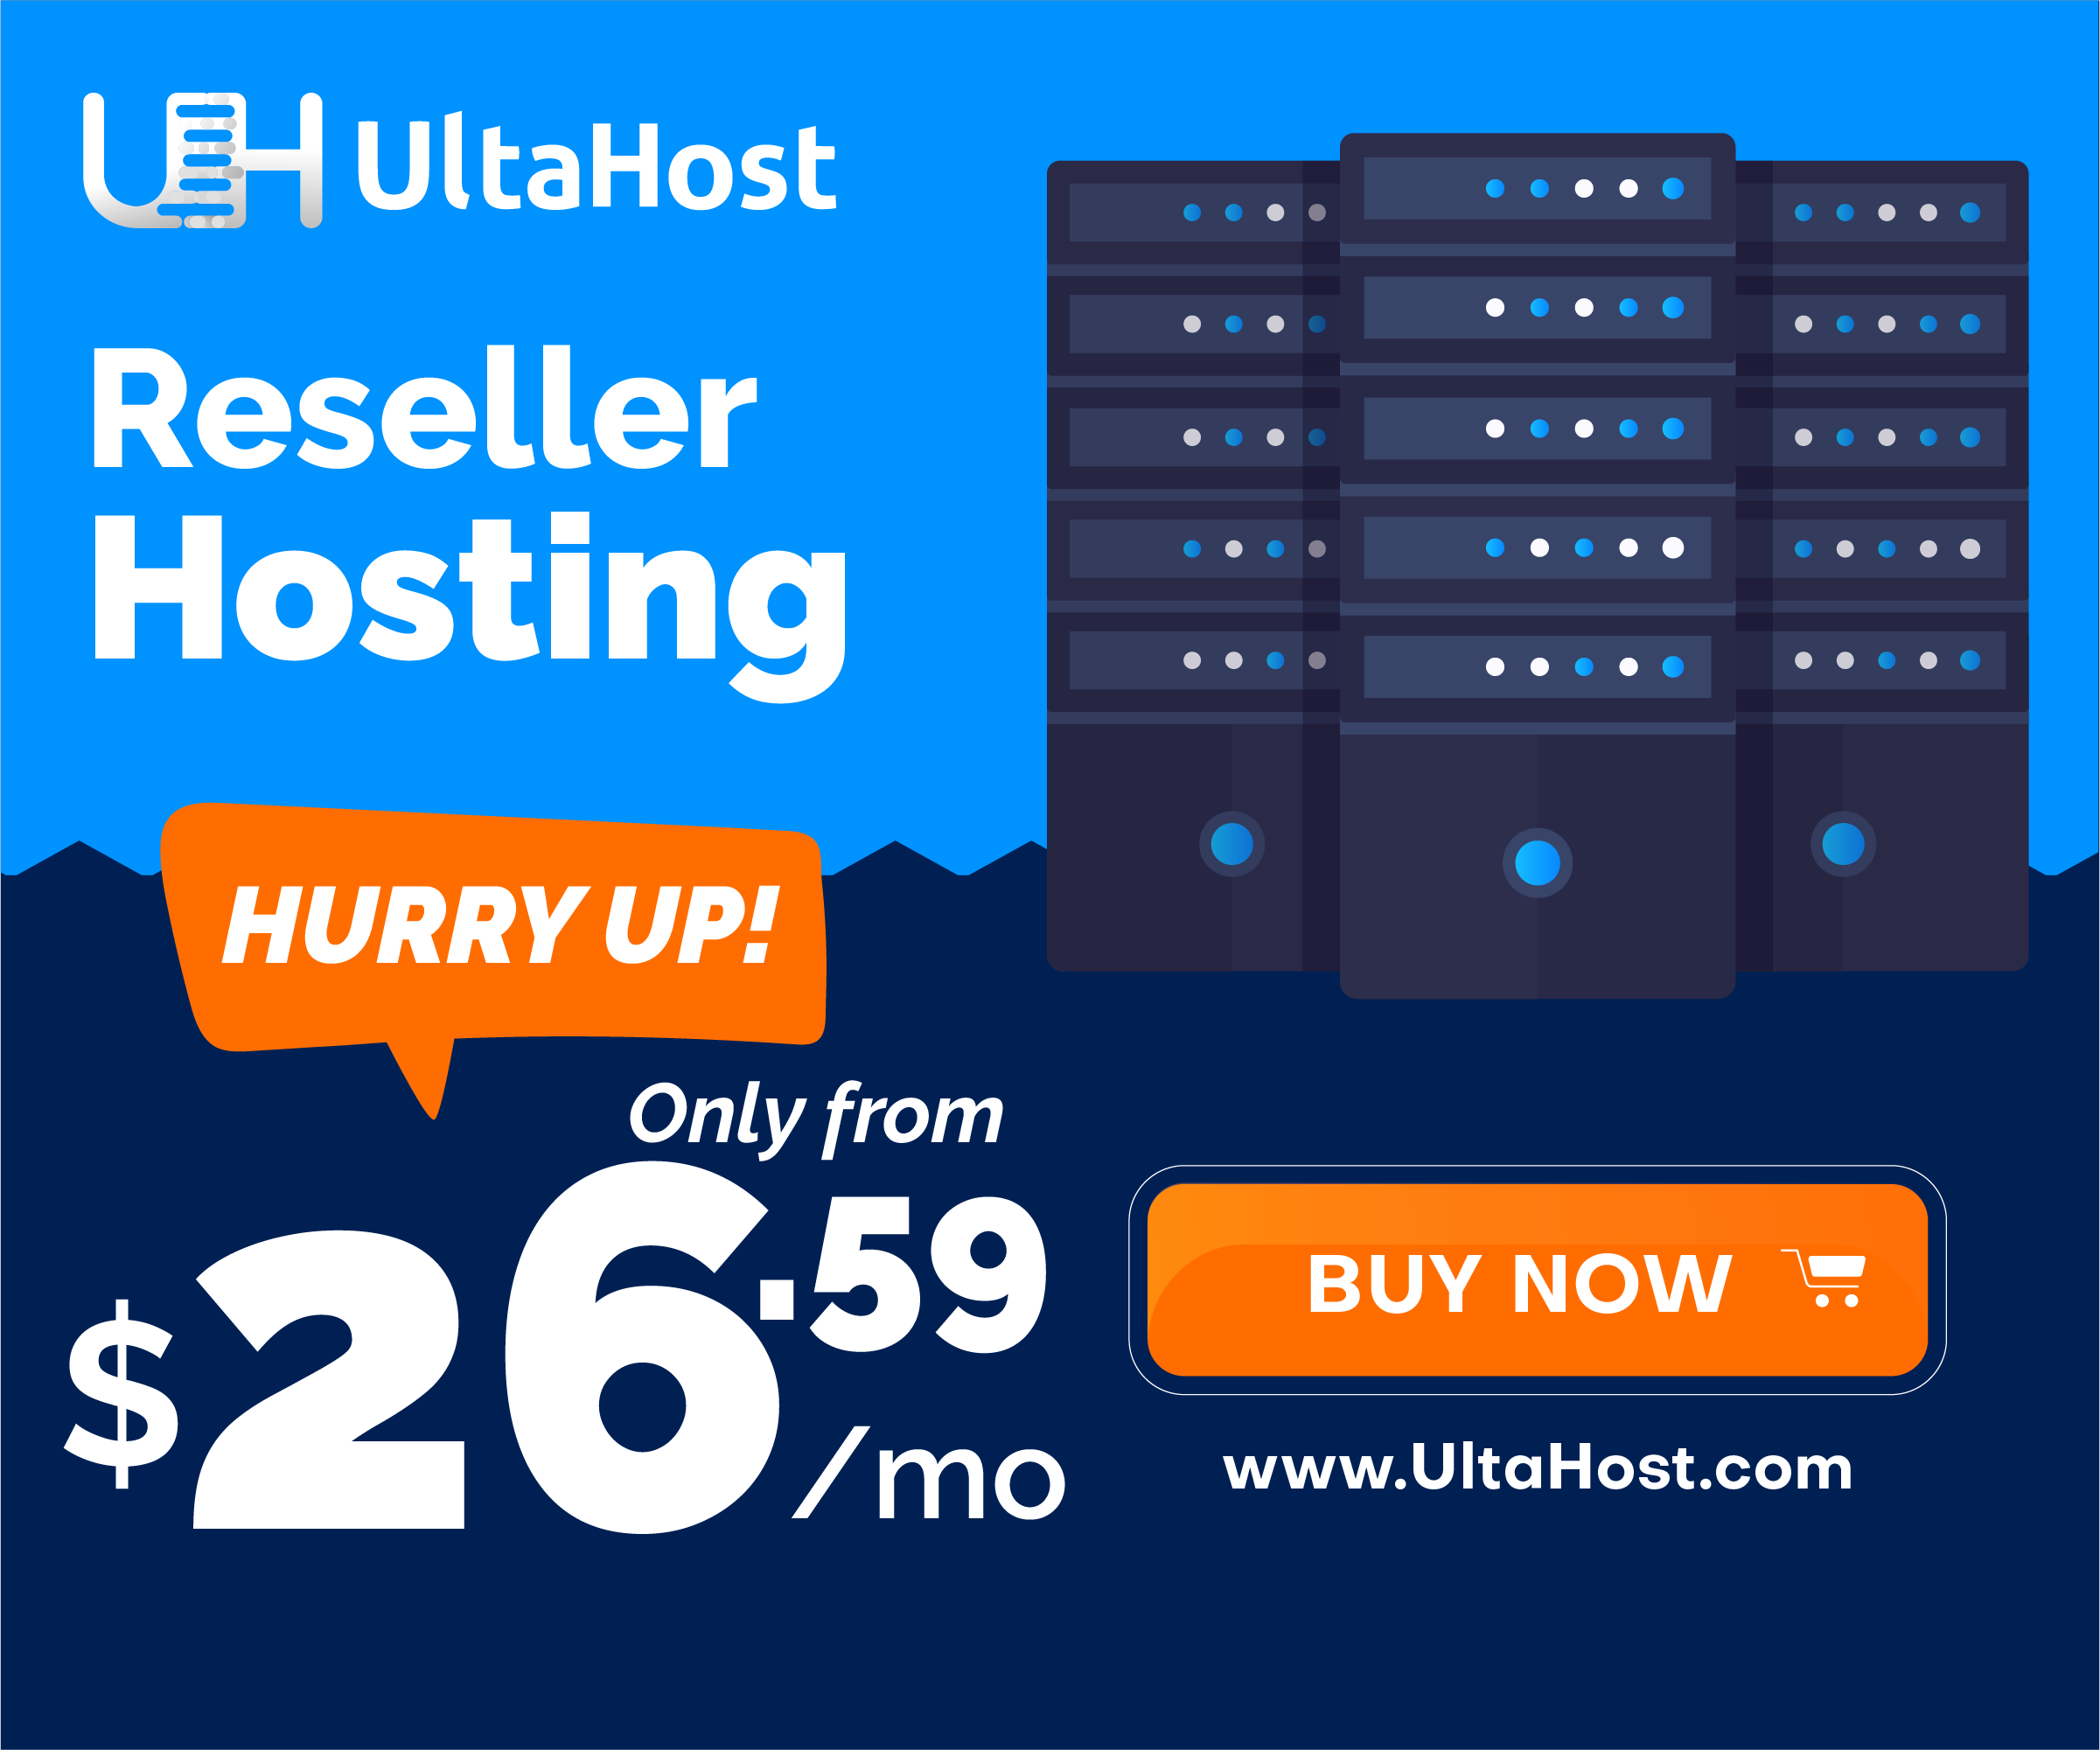 ultahost_cheap_reseller _hosting_336x280